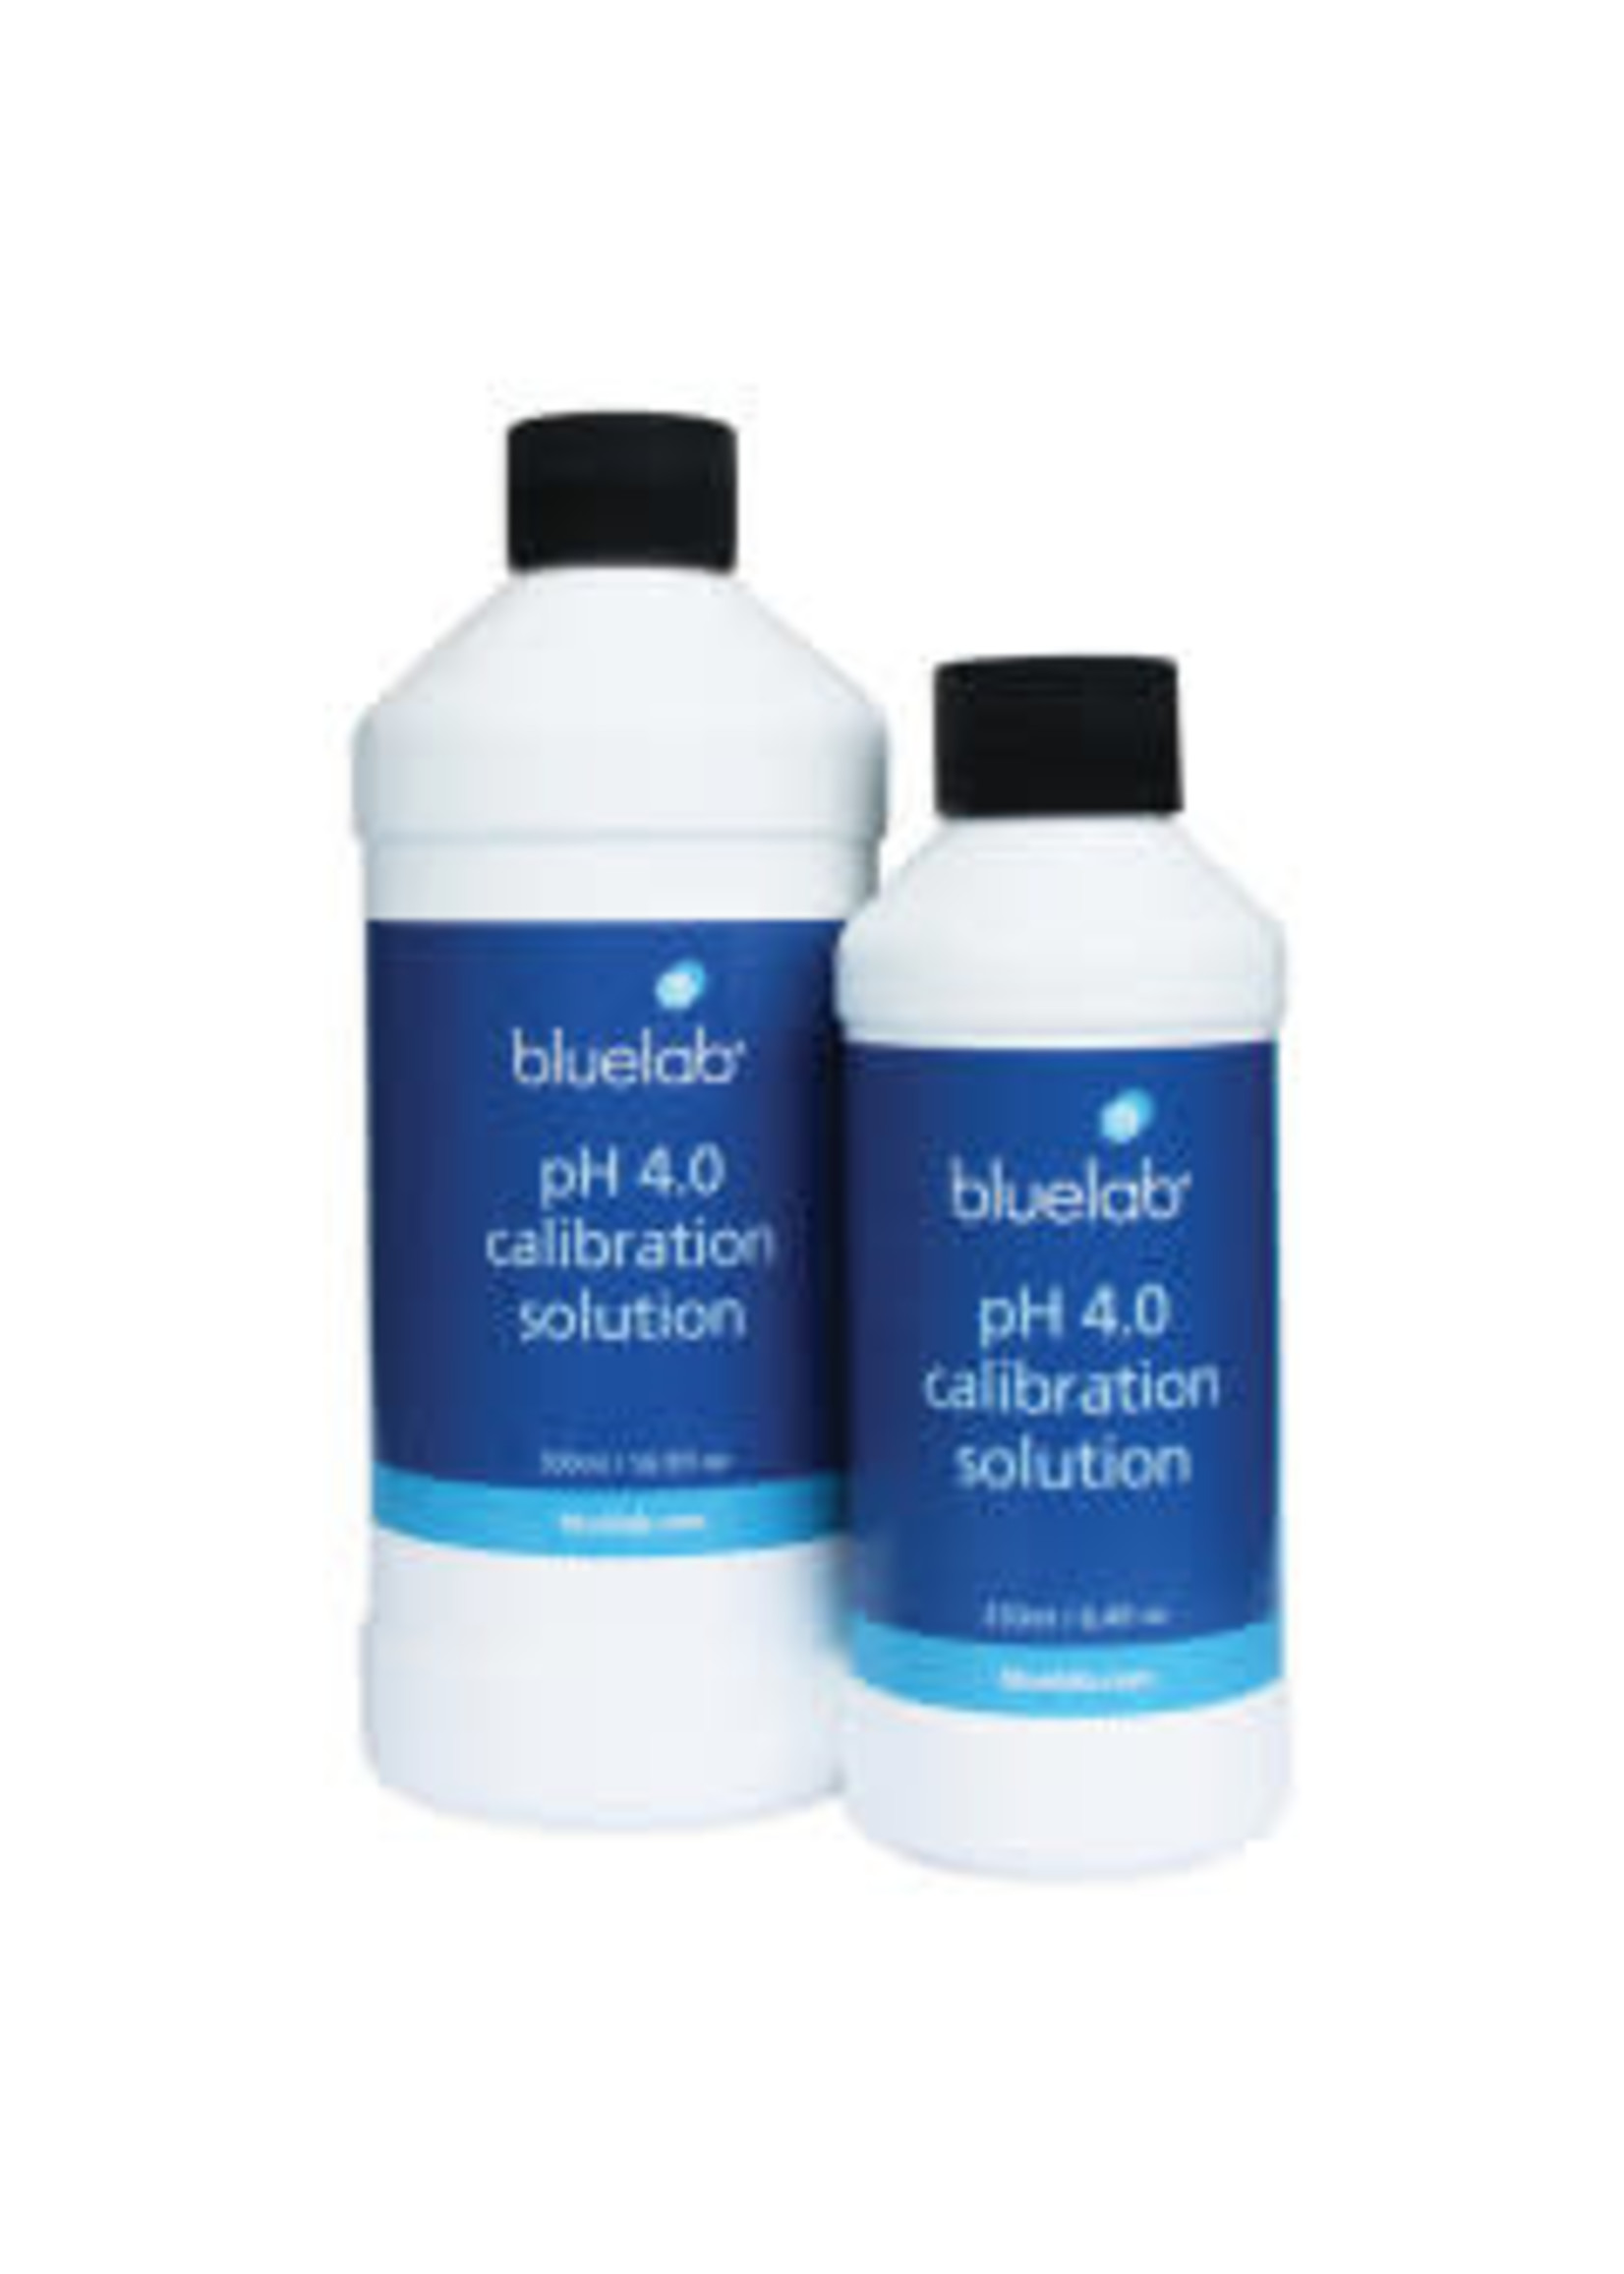 BlueLab Blue lab Calibration Solution pH 4.0